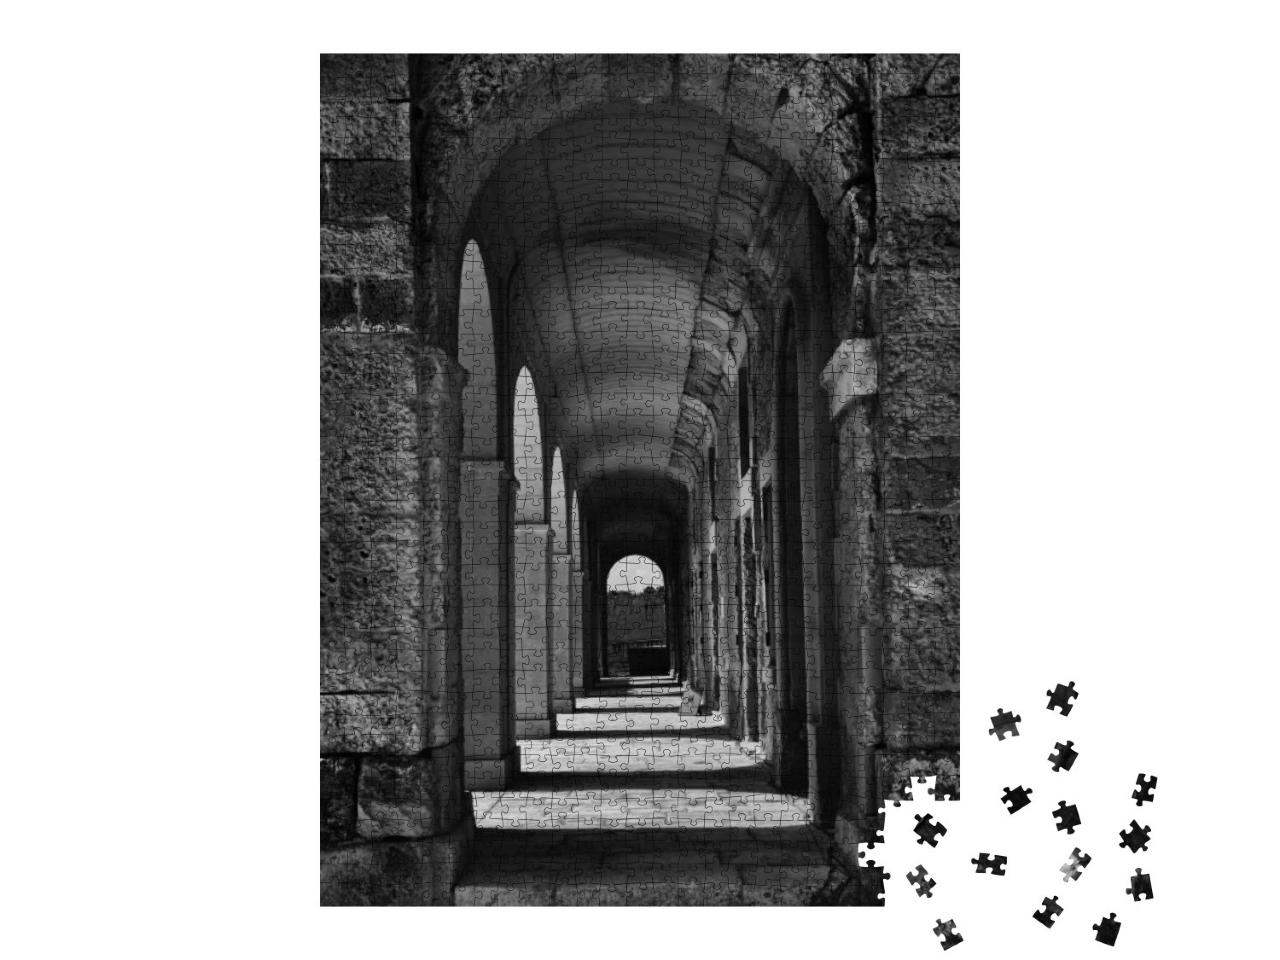 Puzzle 1000 Teile „Steinkorridor mit Säulen, Fort Manoel, Malta “